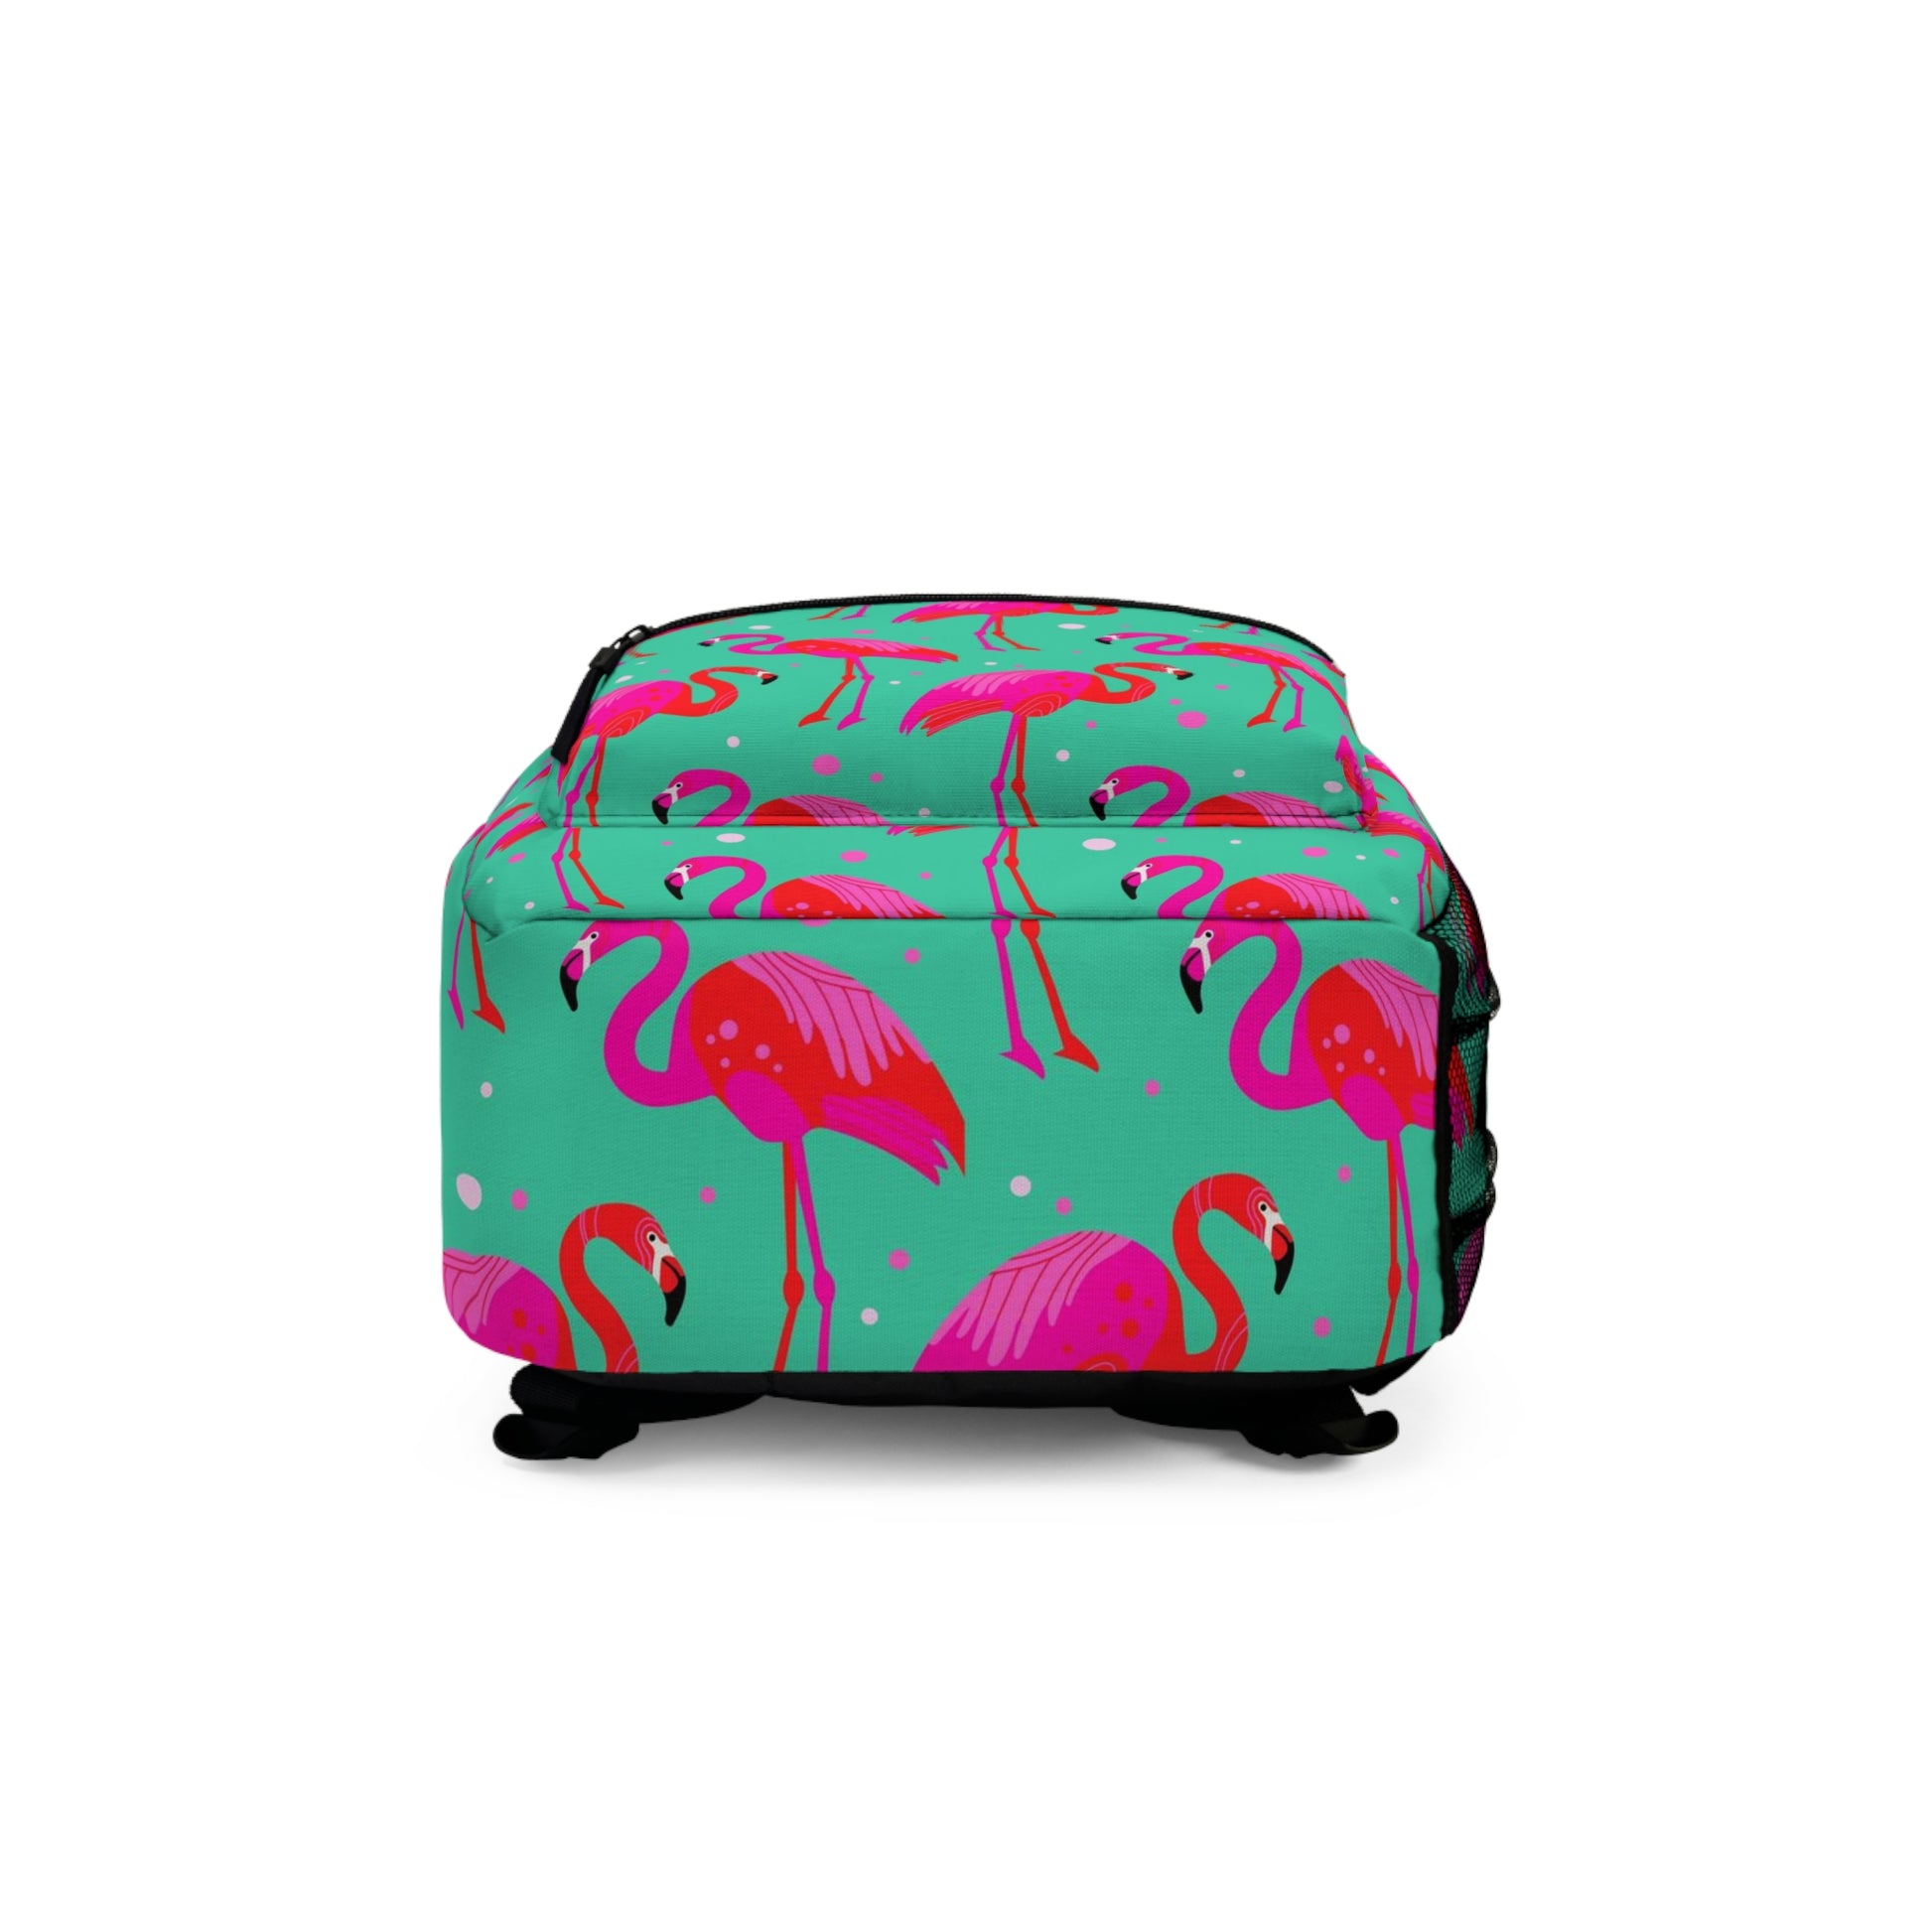 Pink Flamingo Backpack, Green Men Women Kids Gift Him Her School College Waterproof Side Pockets Aesthetic Bag Starcove Fashion